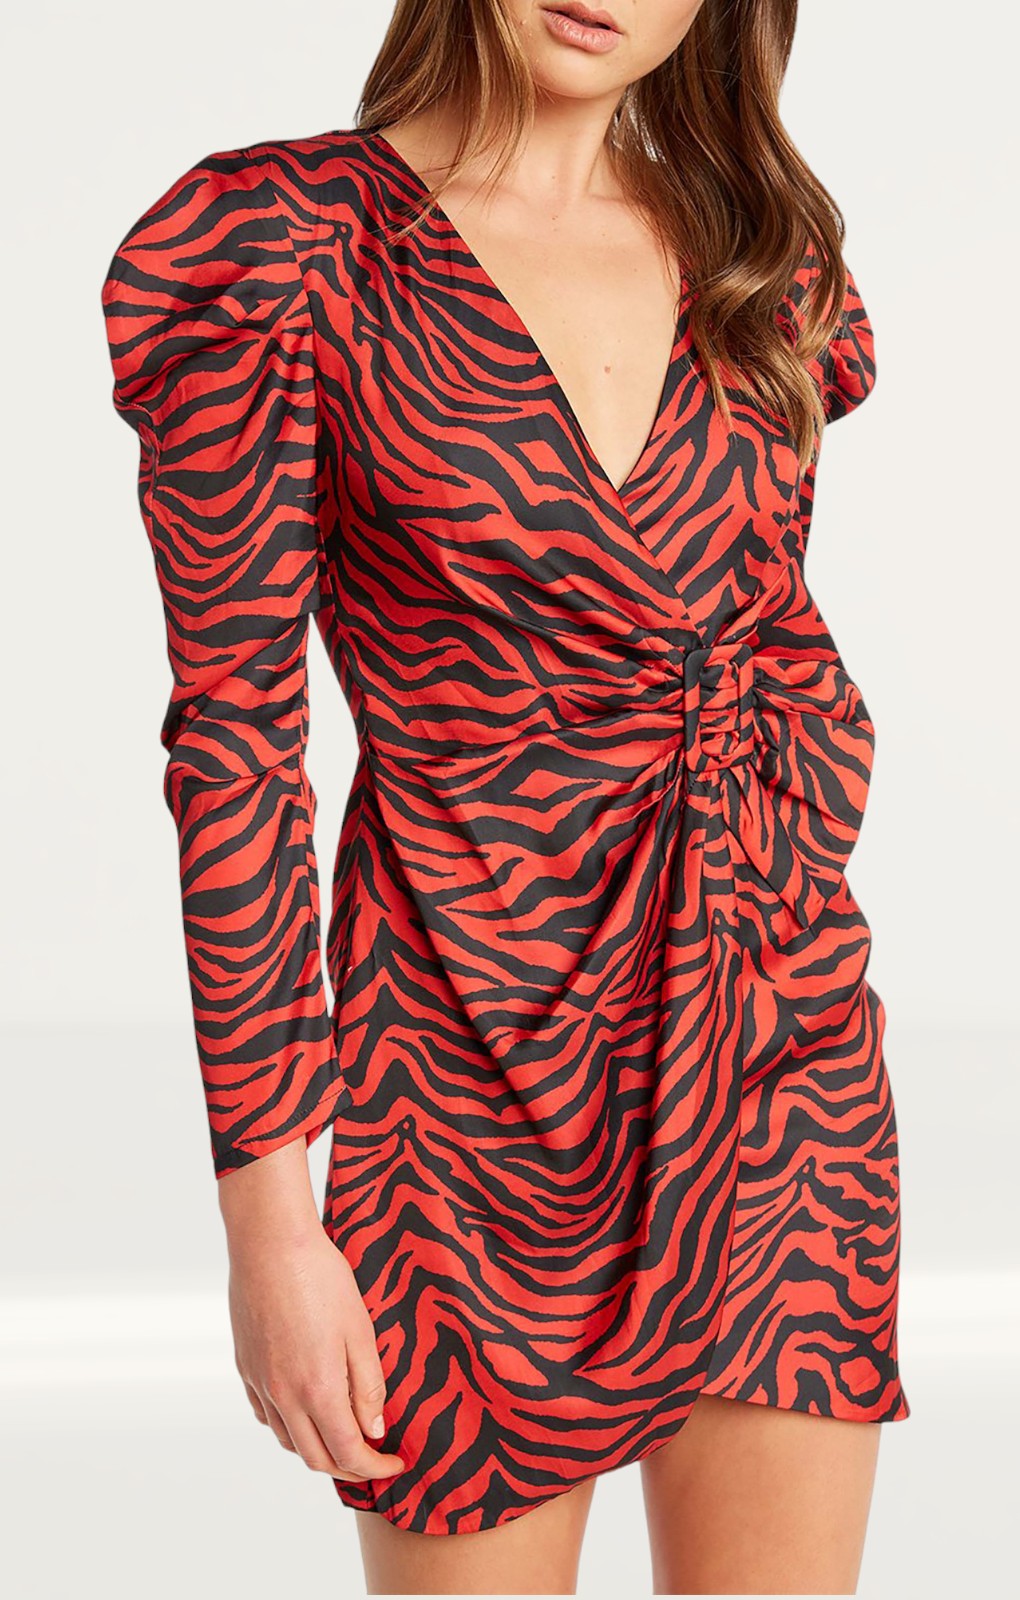 Bardot Red Zebra Print Dress product image